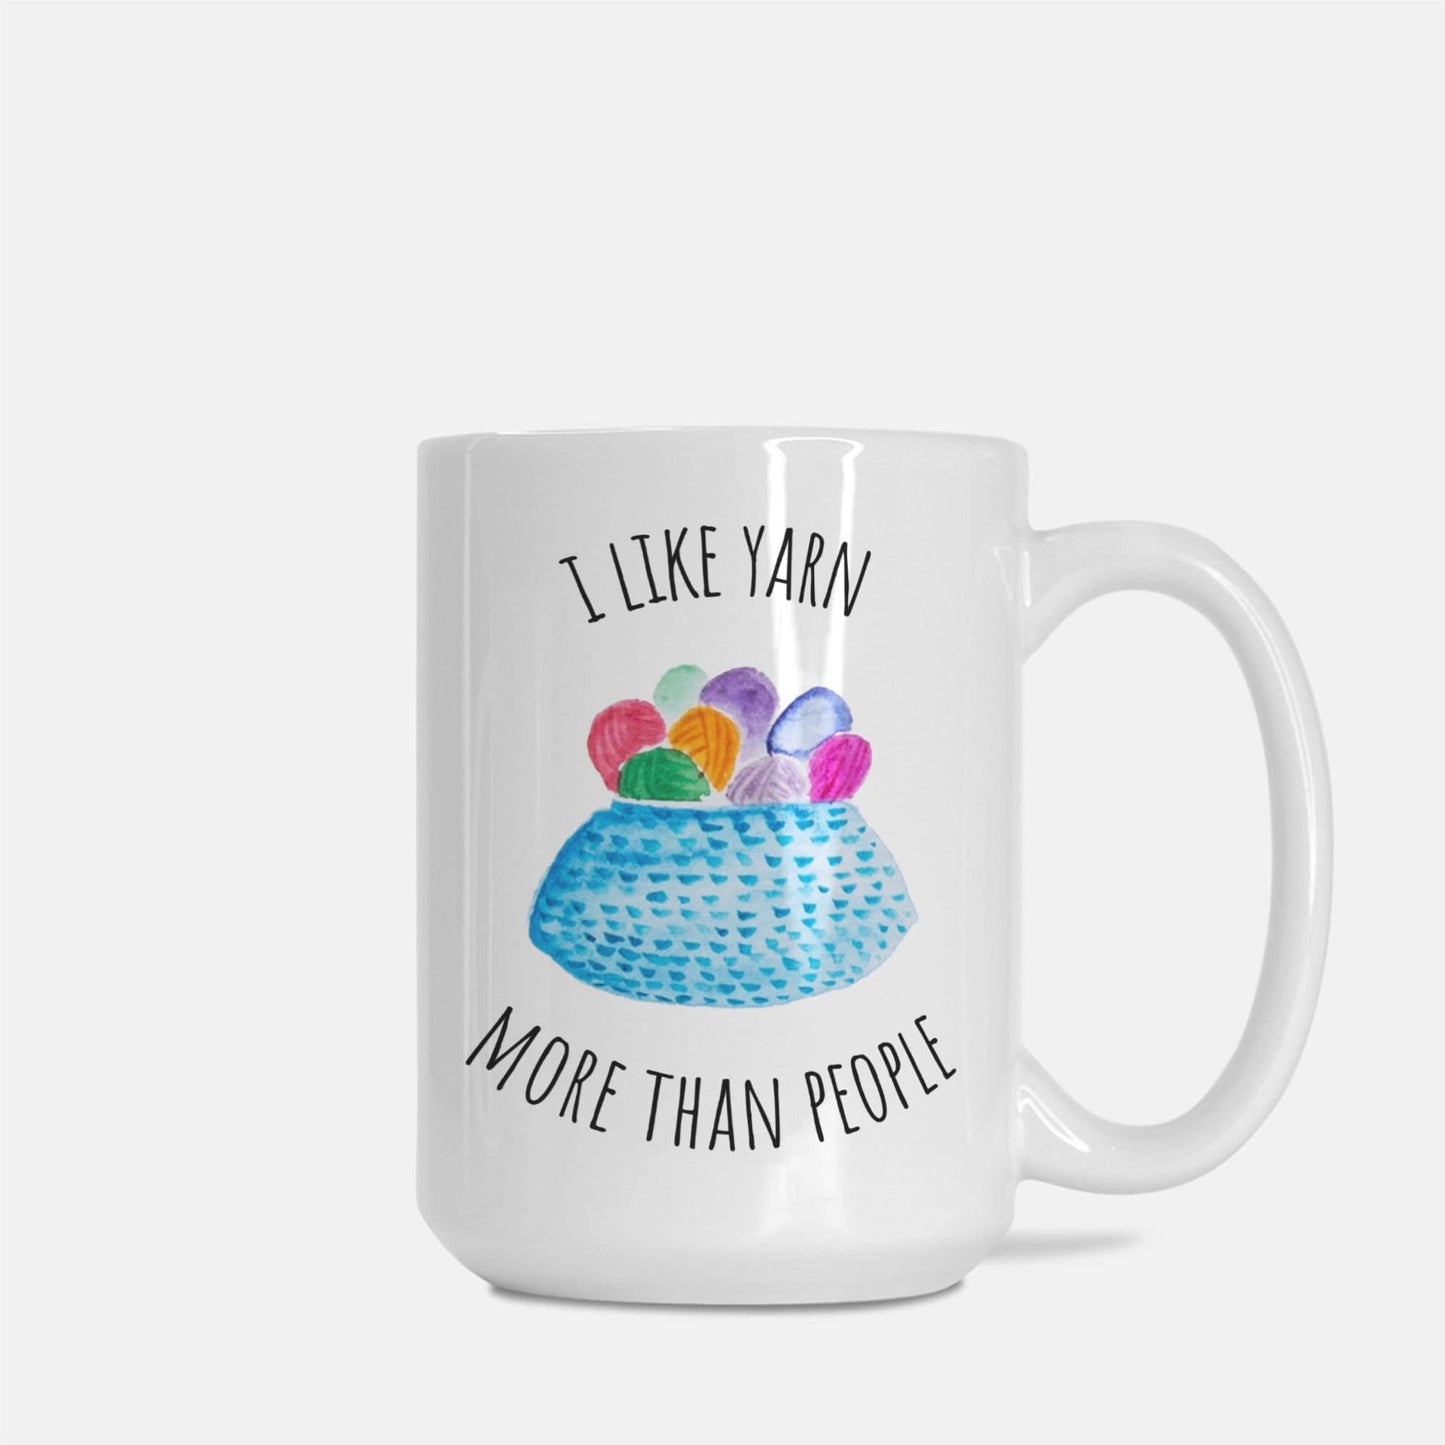 "I Like Yarn More Than People" Mug